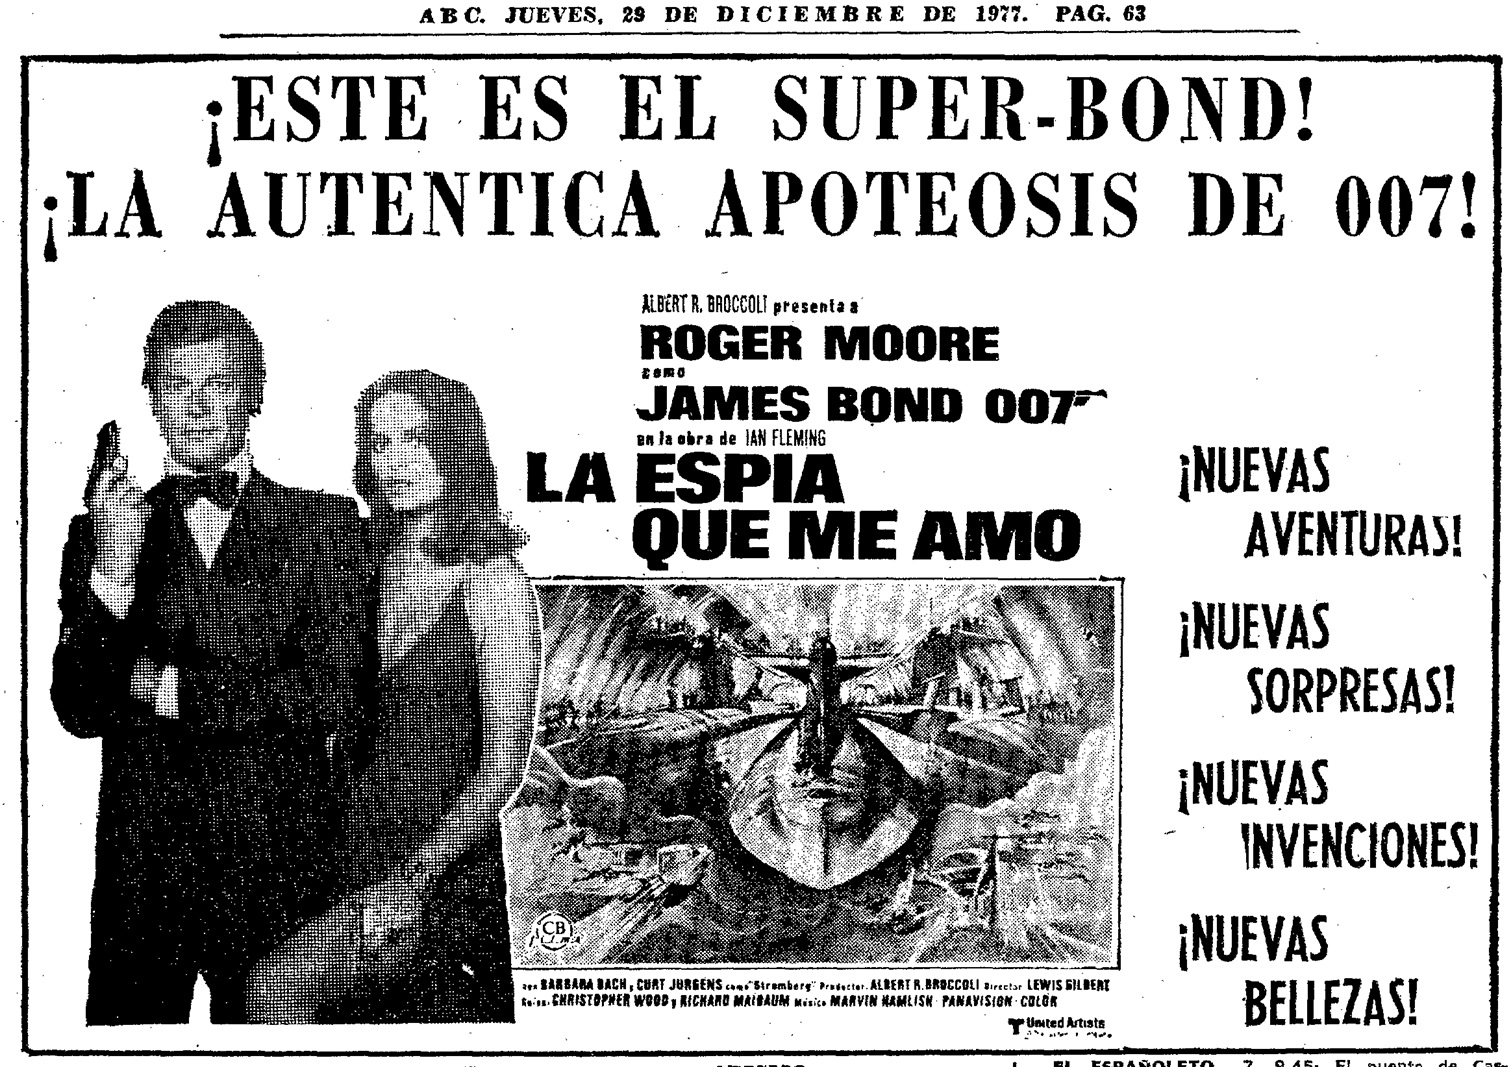 10 1977 12 29 ABC Madrid 071 Estreno